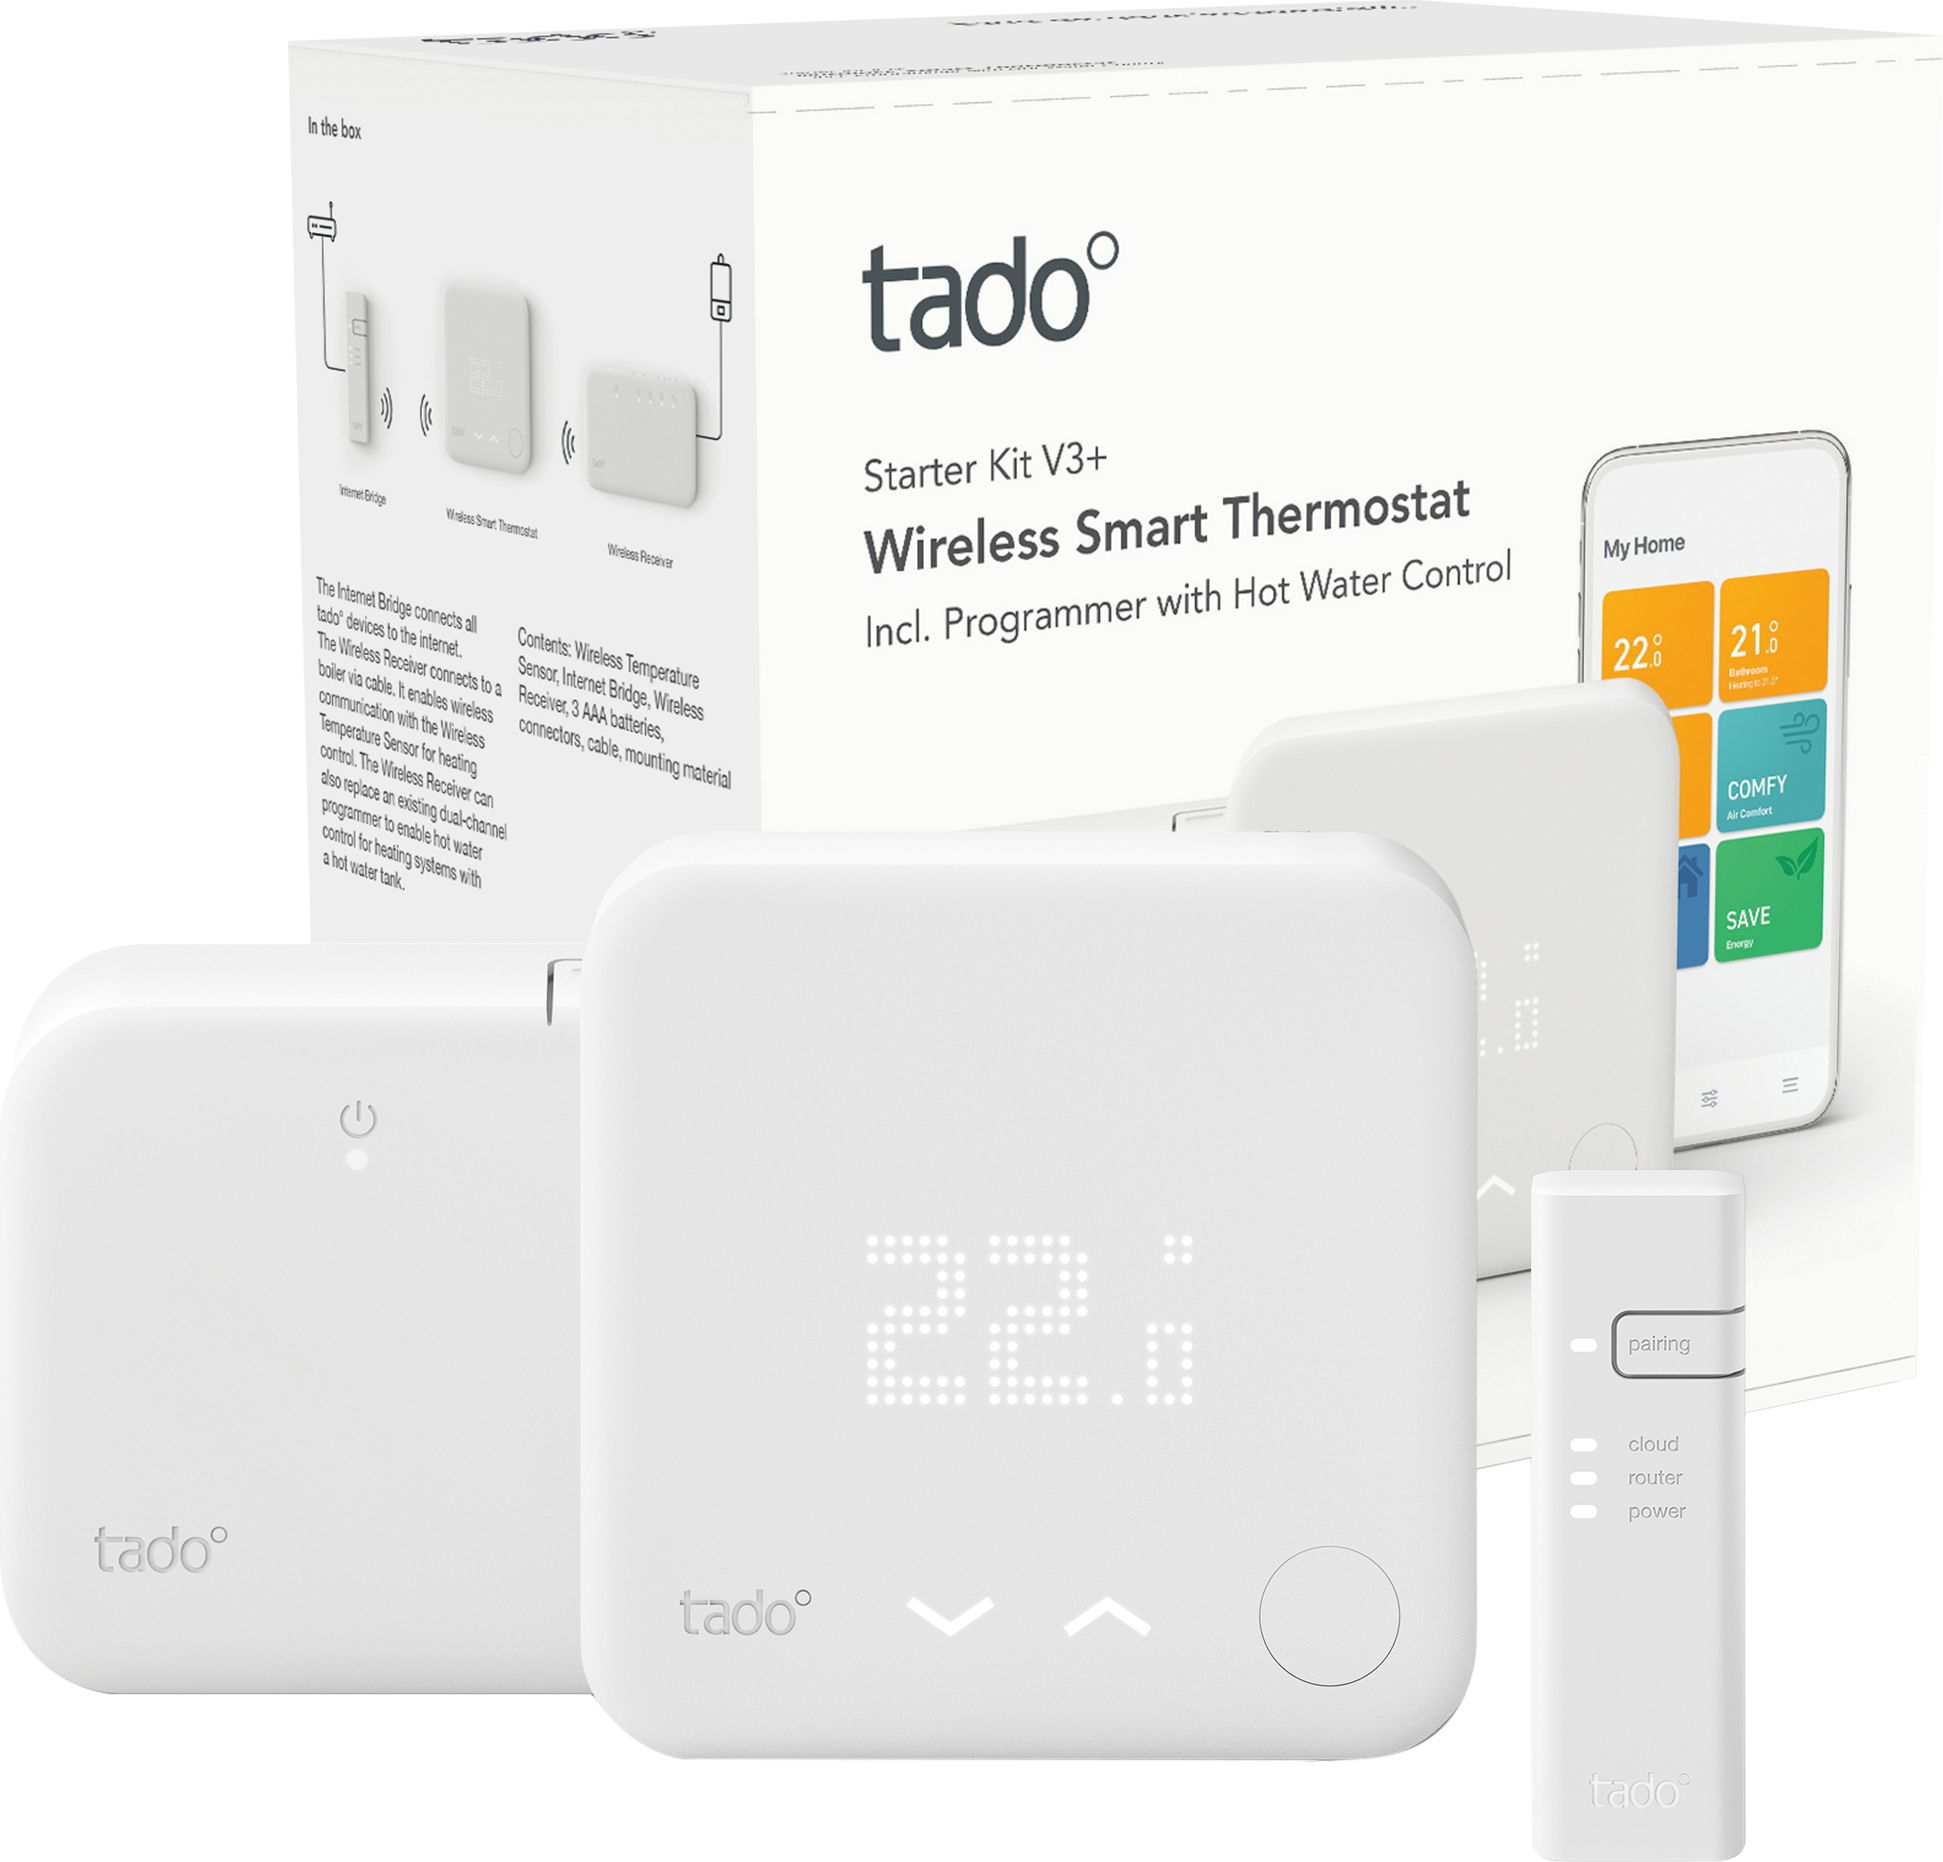 tadoº Starter Kit - Wireless Smart Thermostat V3+ - DIY Install - White